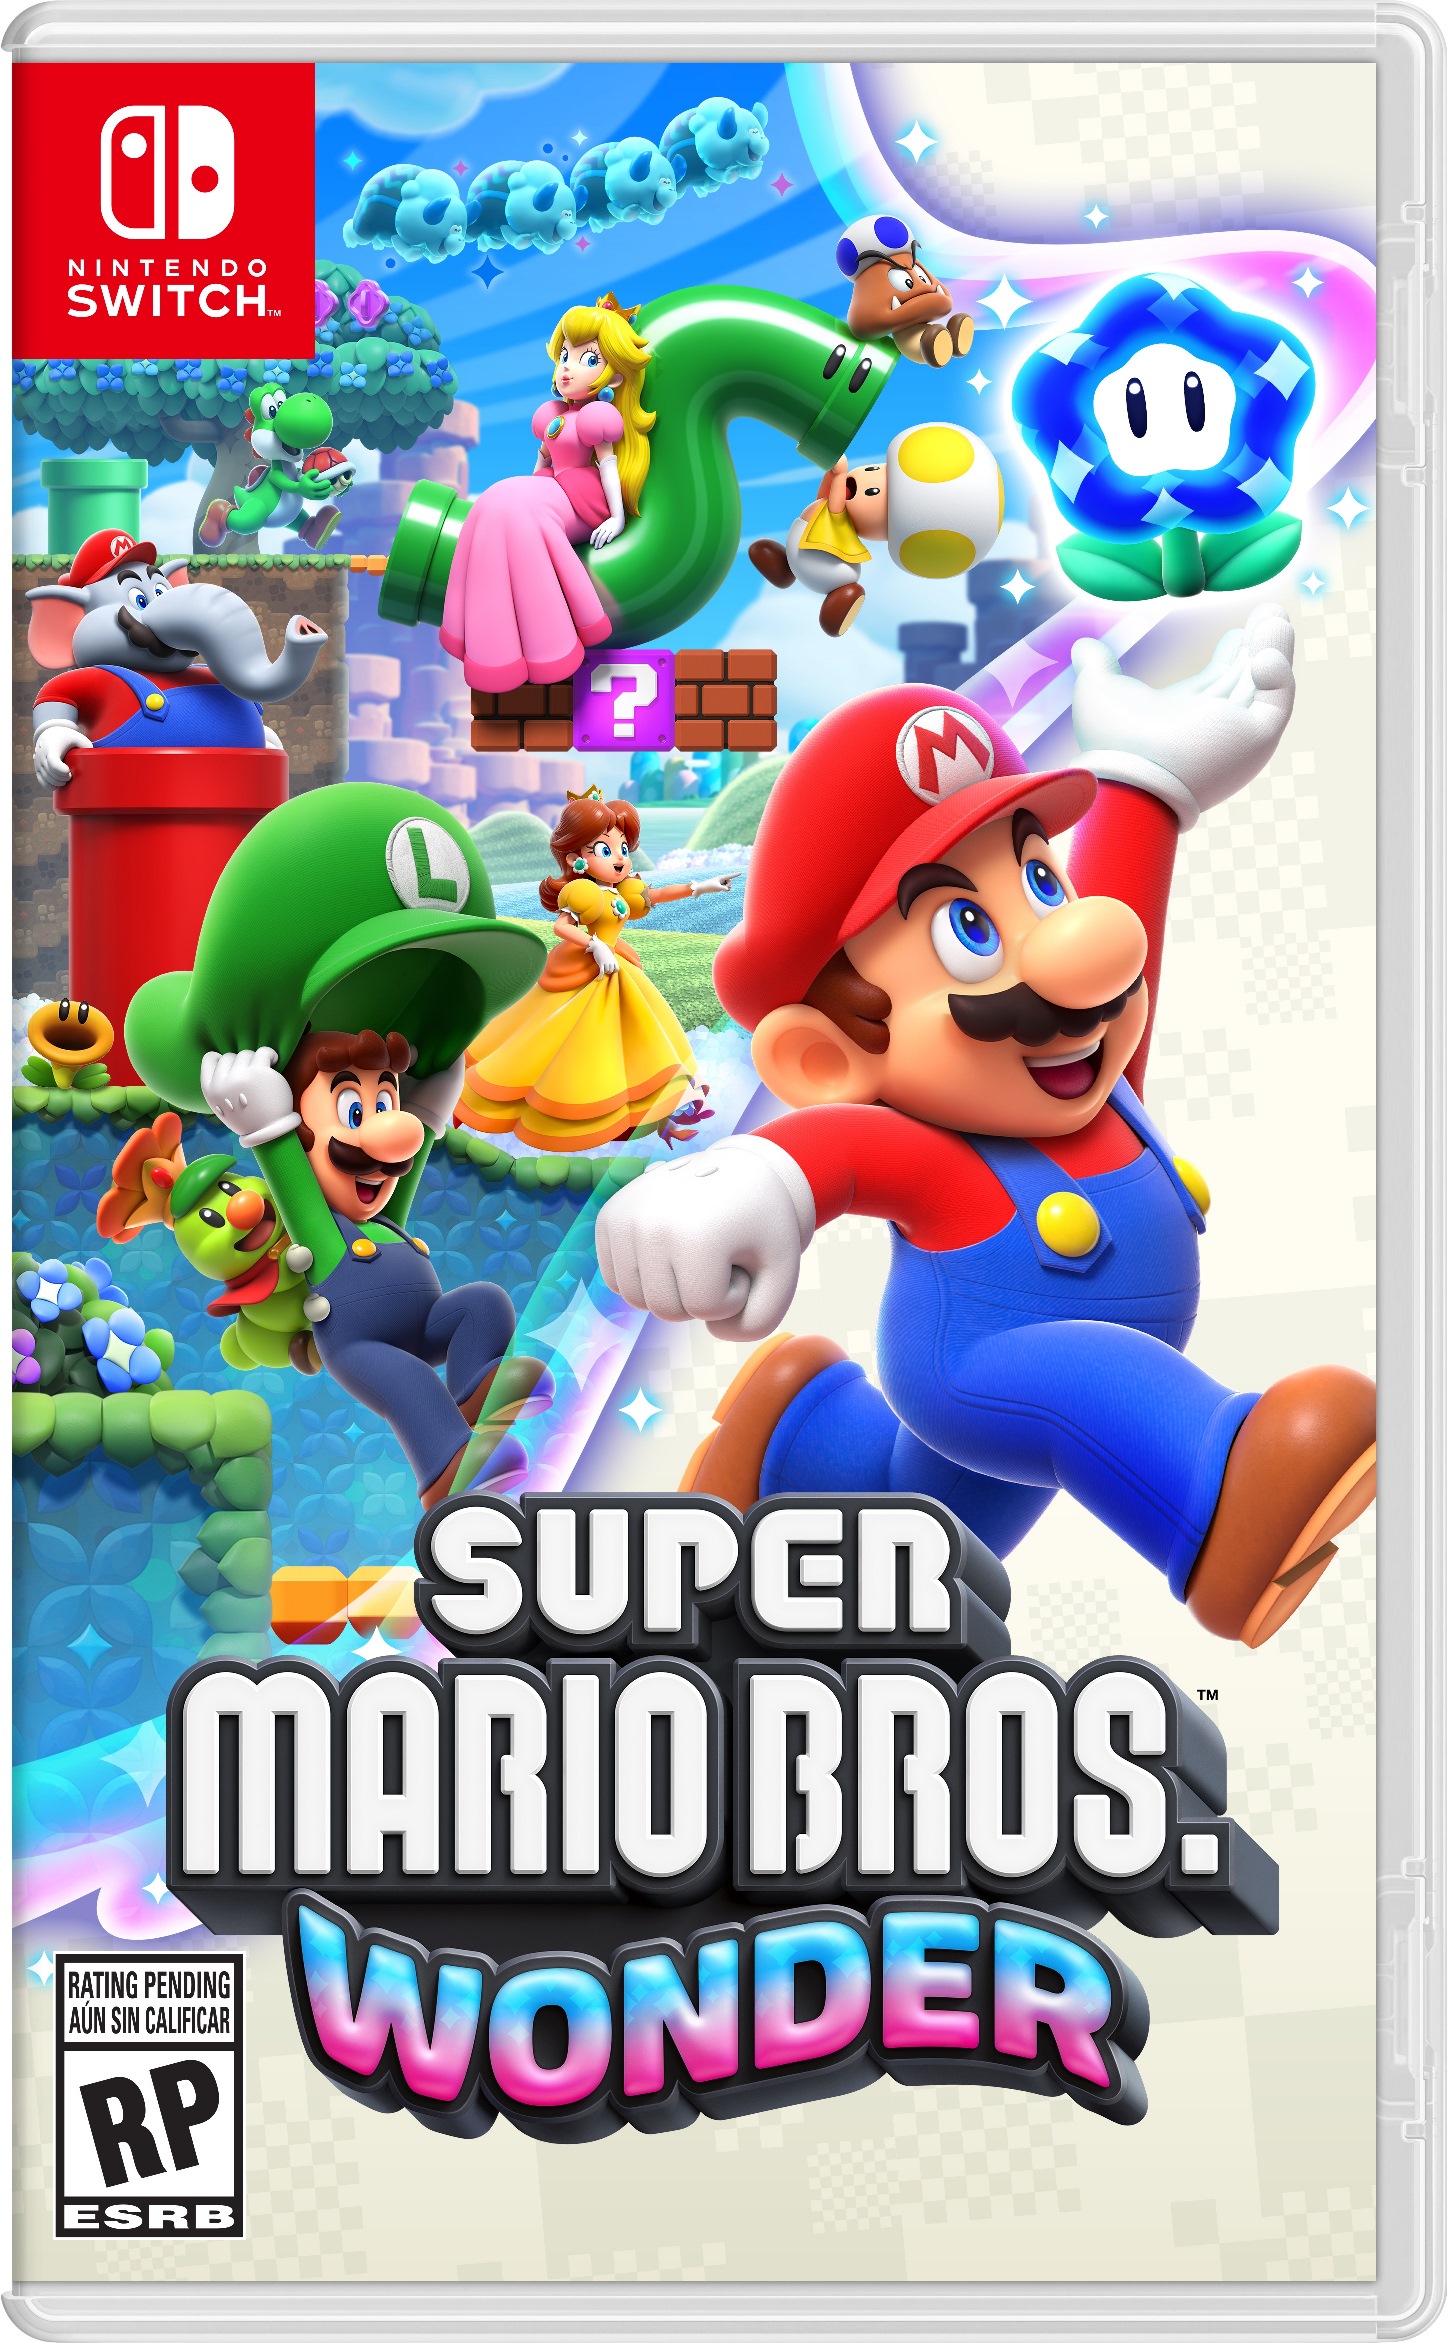 Super Mario Bros. Wonder revealed for Switch